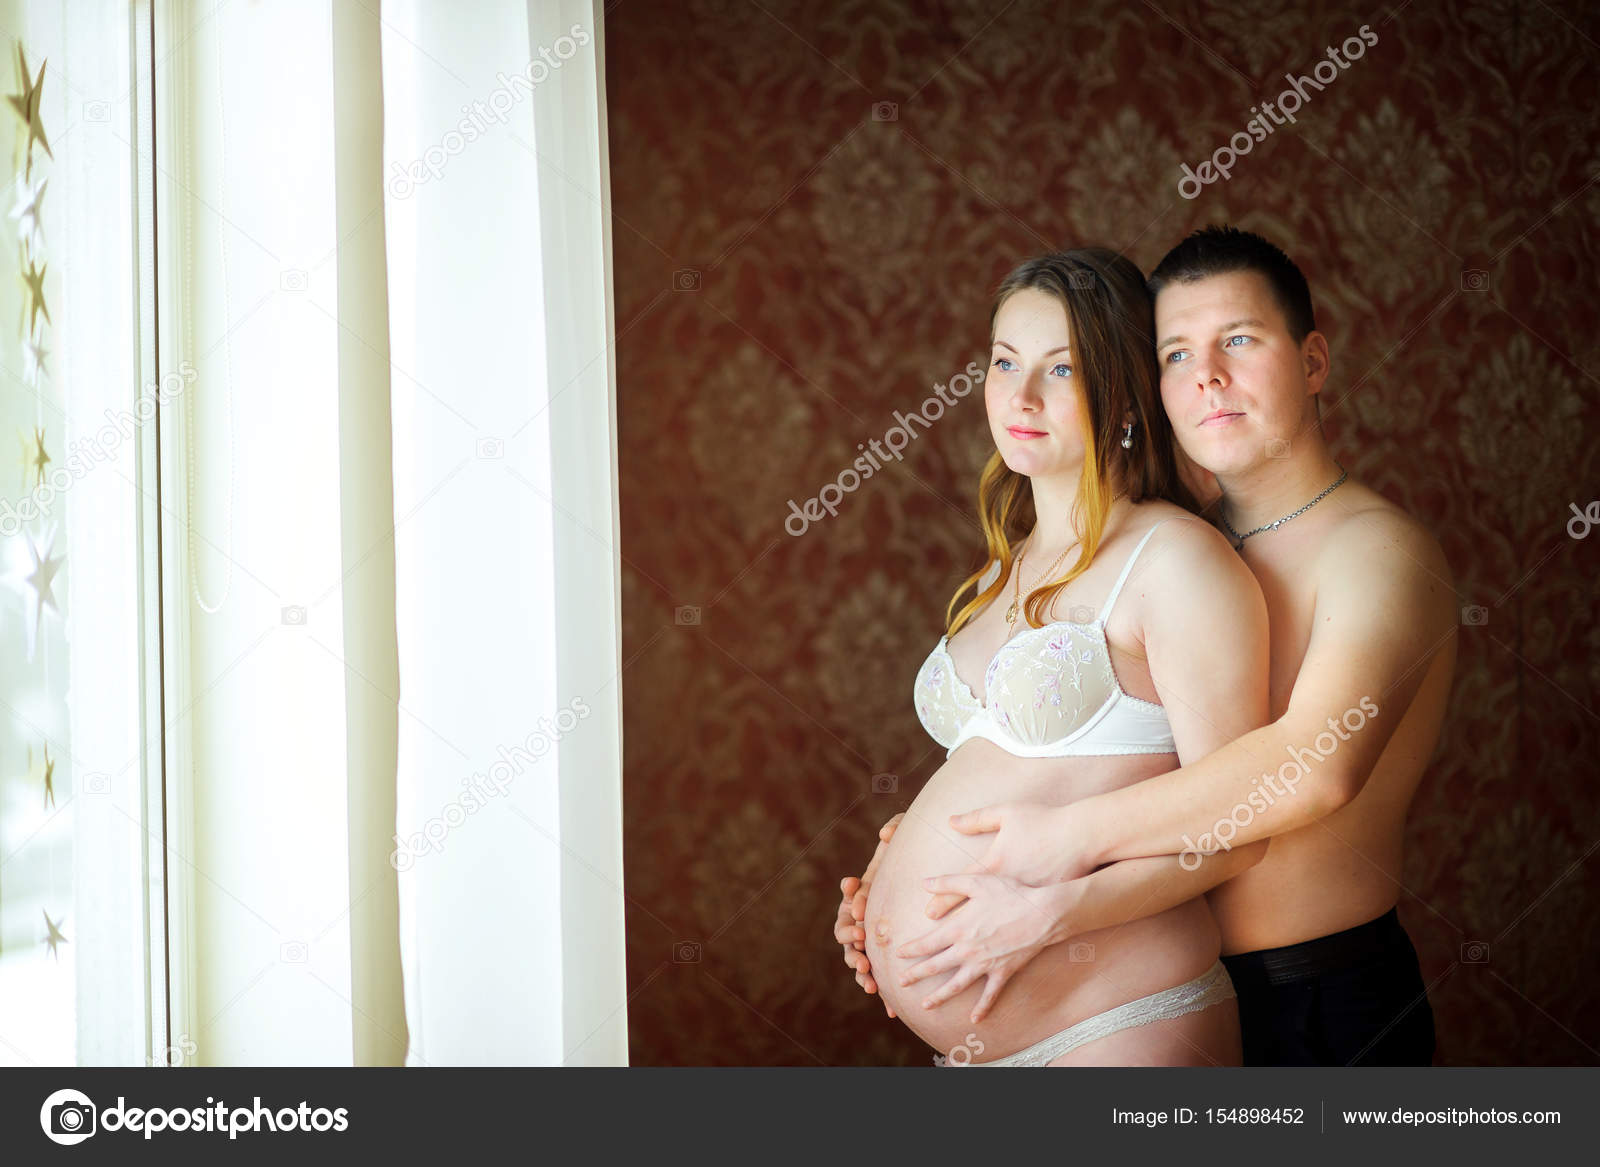 Hermosa chica embarazada desnuda fotografía de stock © fotosaga #154898452 Depositphotos foto